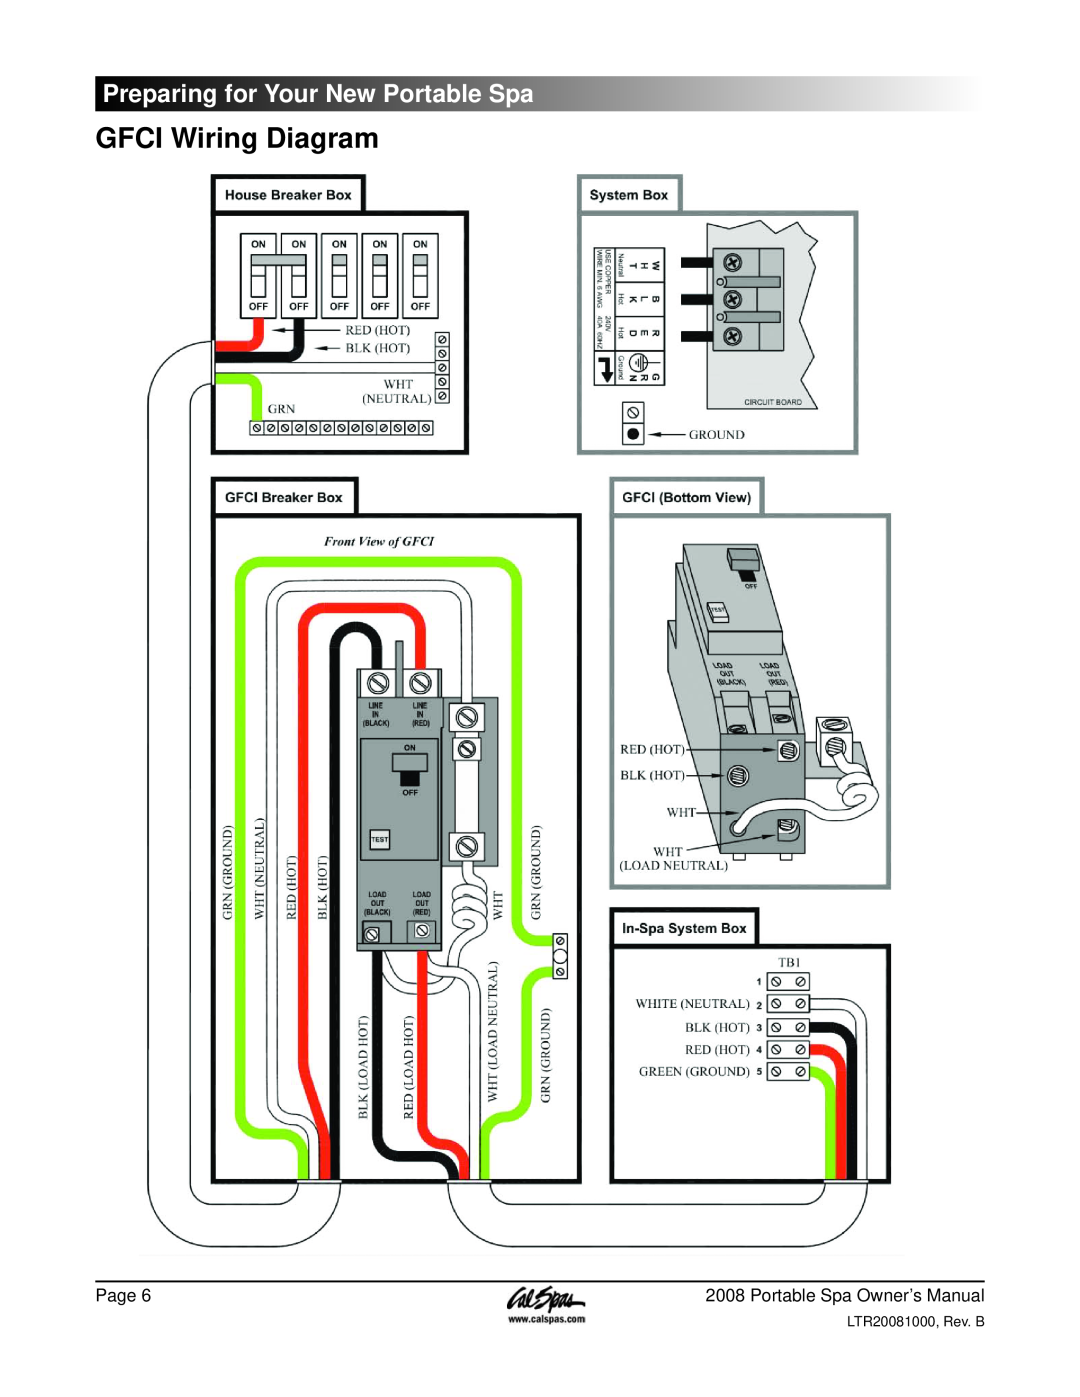 Cal Spas 6200, 6300, 5100 manual GFCI Wiring Diagram, Preparing for Your New Portable Spa 